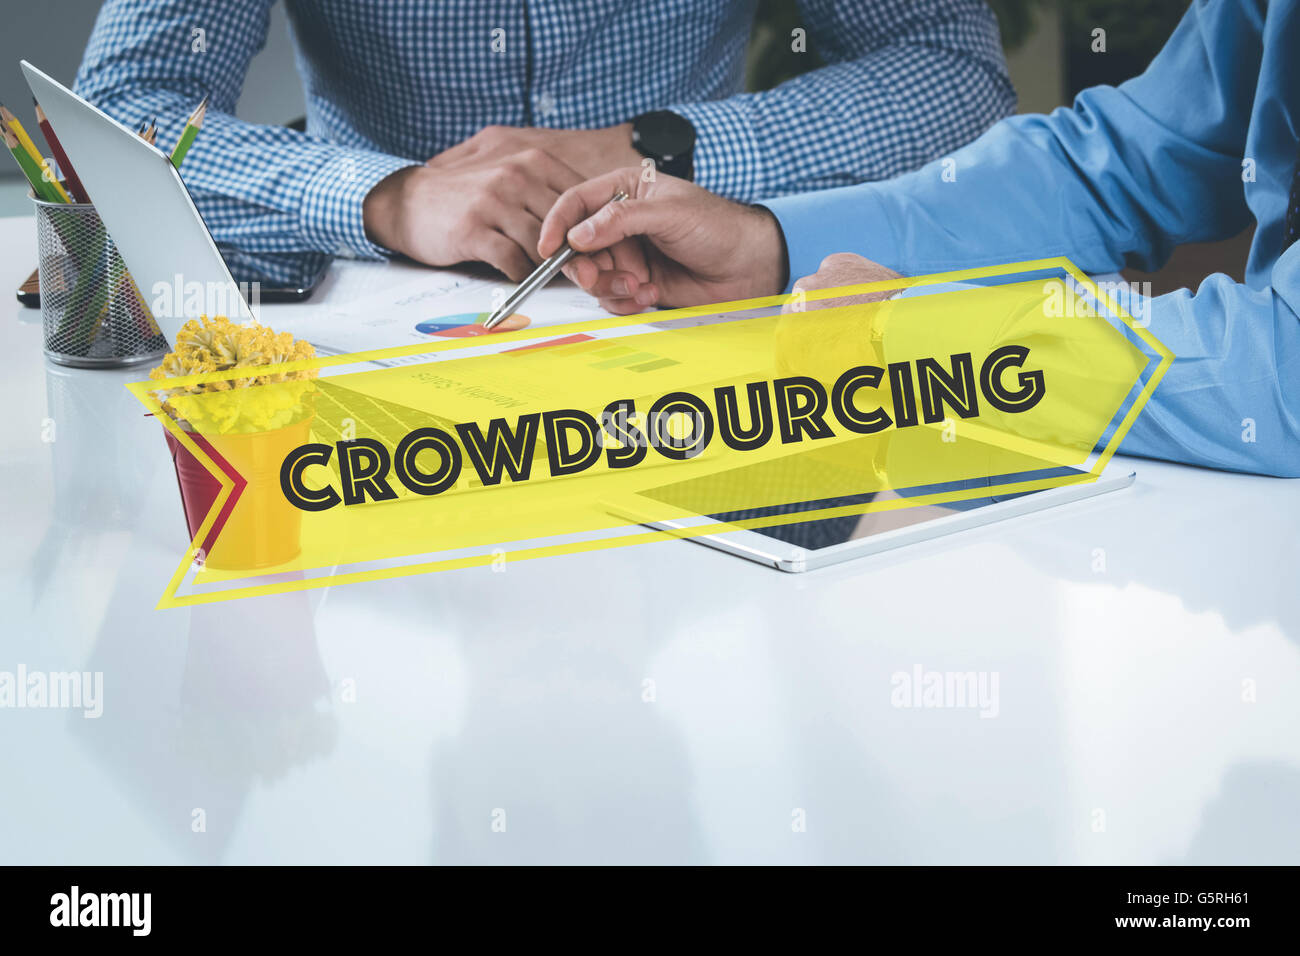 BUSINESS UFFICIO LAVORO Crowdsourcing TEAMWORK Concetto di brainstorming Foto Stock